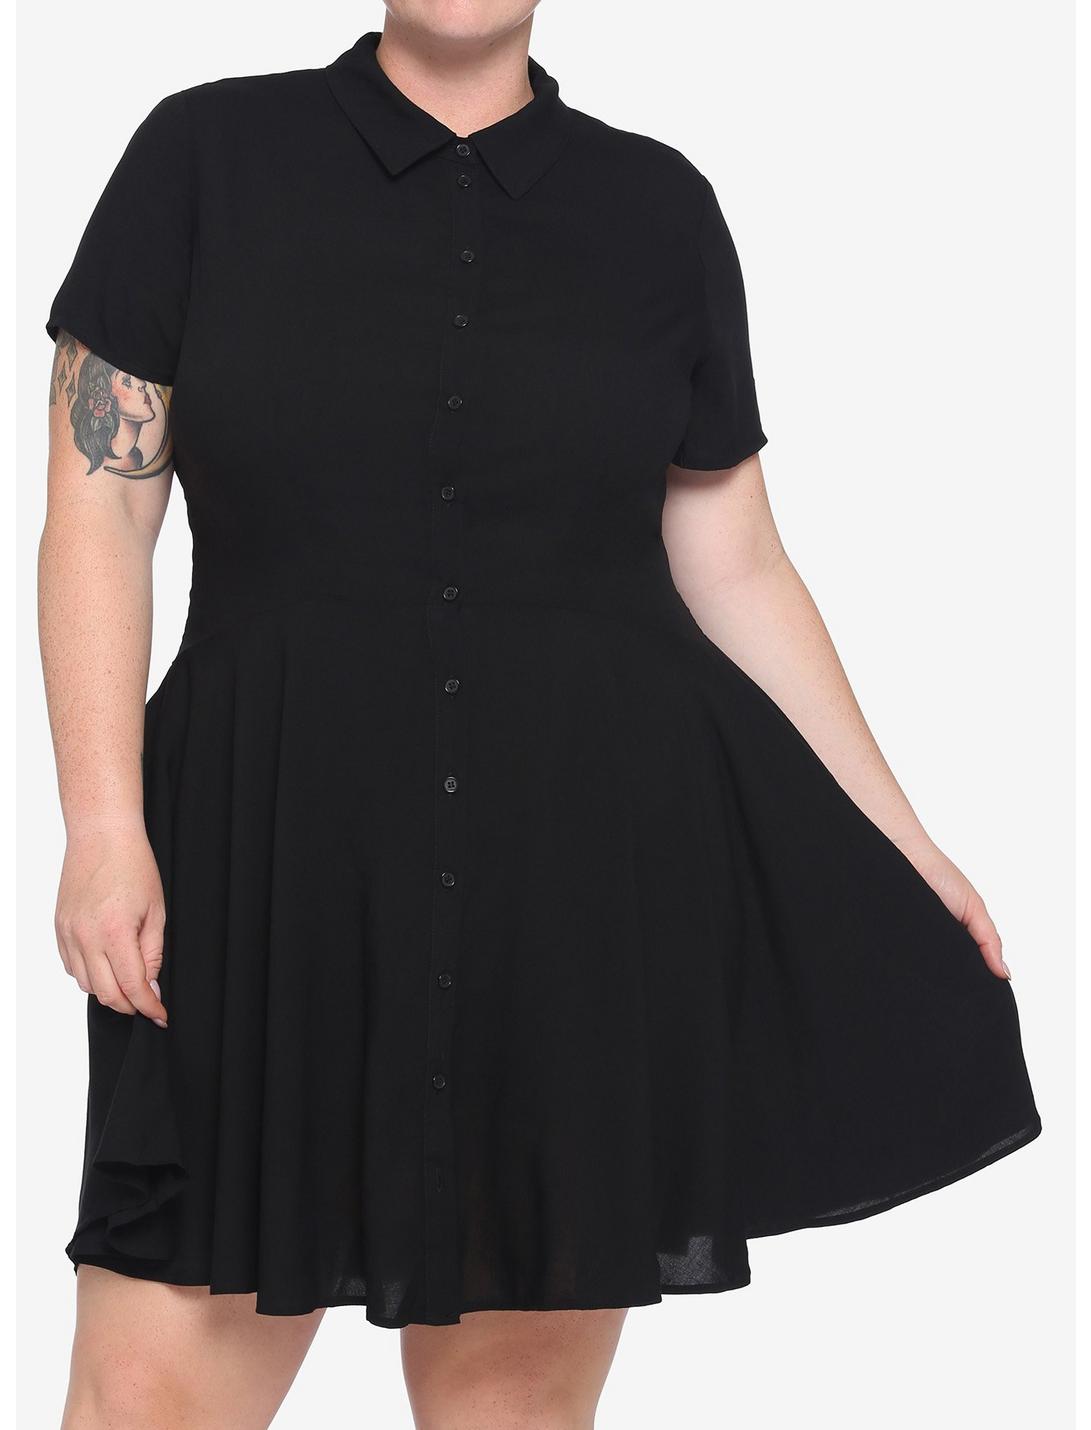 Black Collared Button-Up Dress Plus Size, BLACK, hi-res